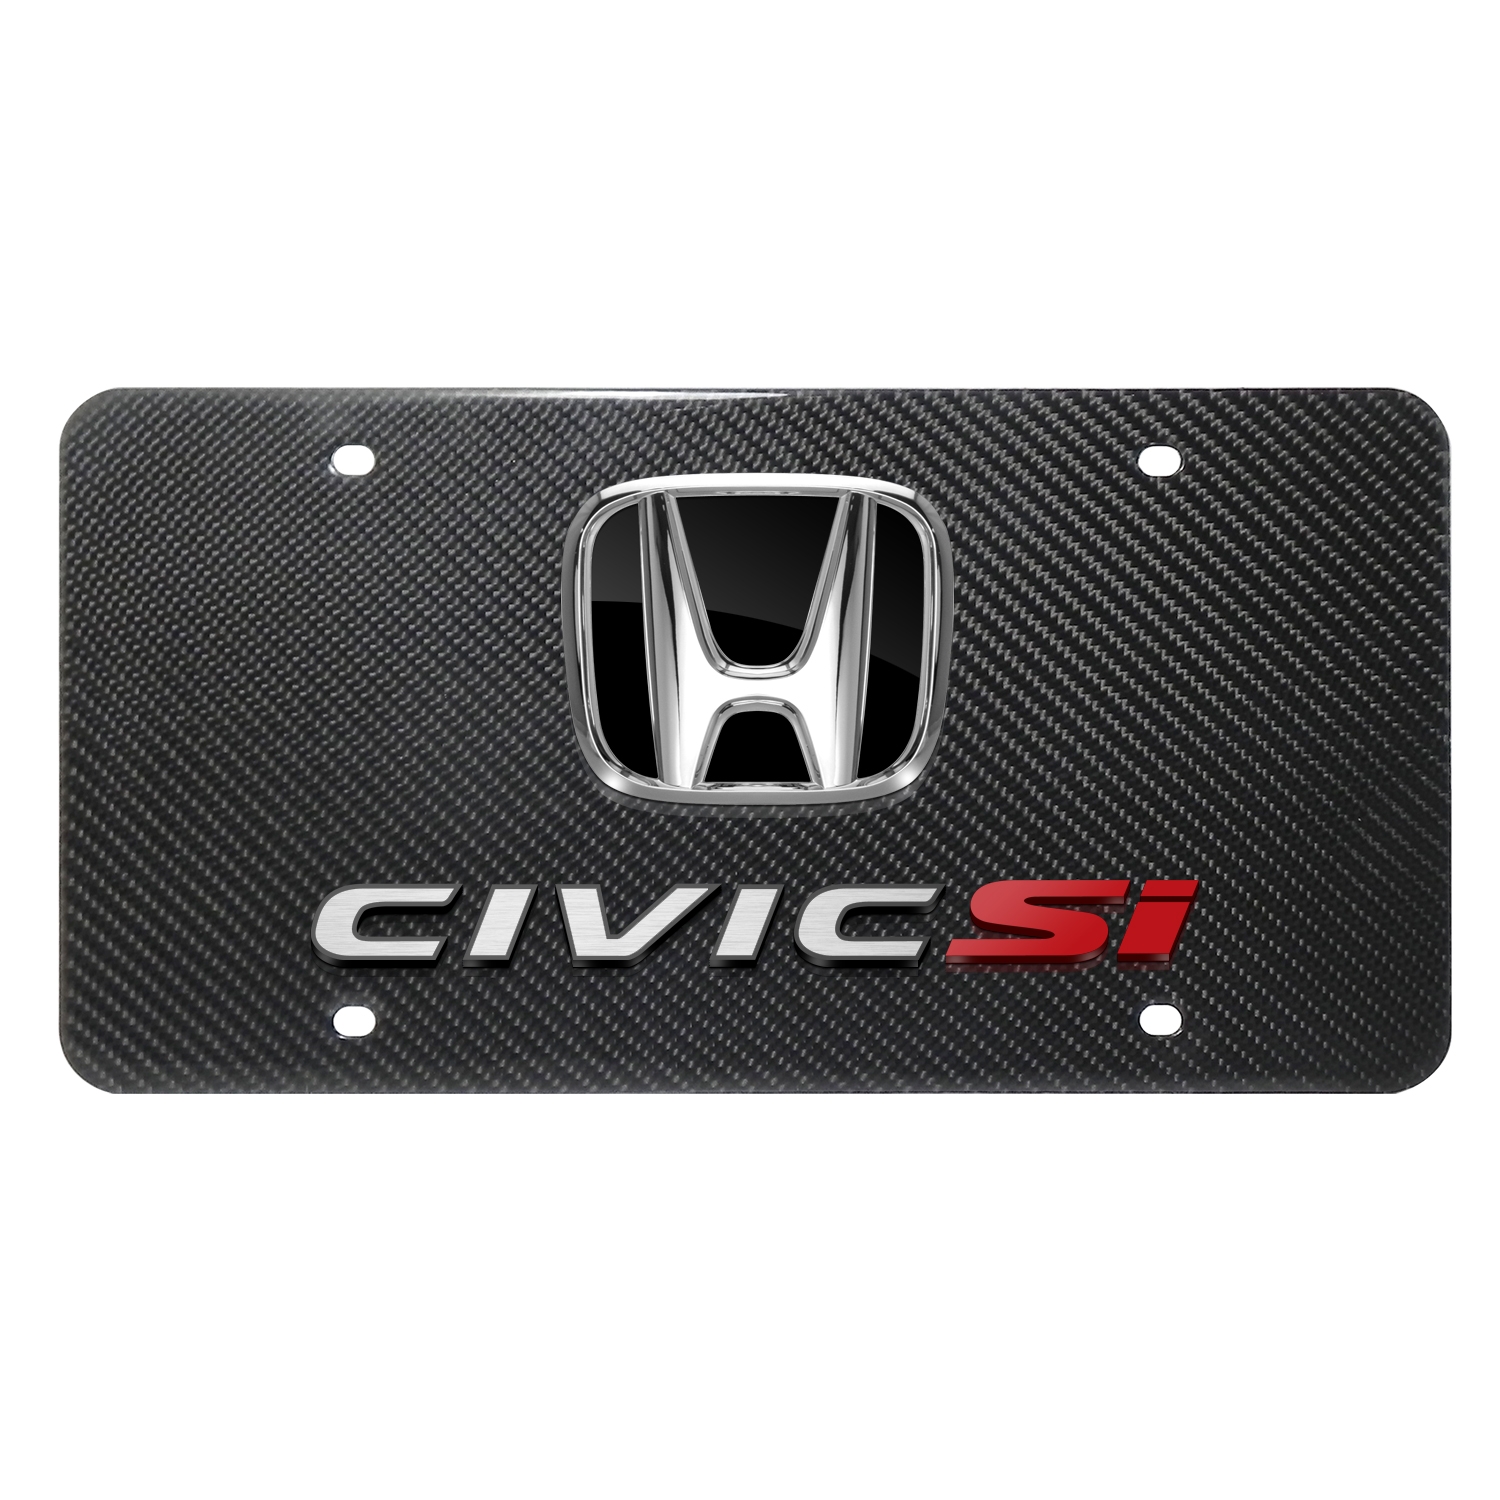 Honda Civic Si 3D Black Logo Dual 100% Real Carbon Fiber License Plate